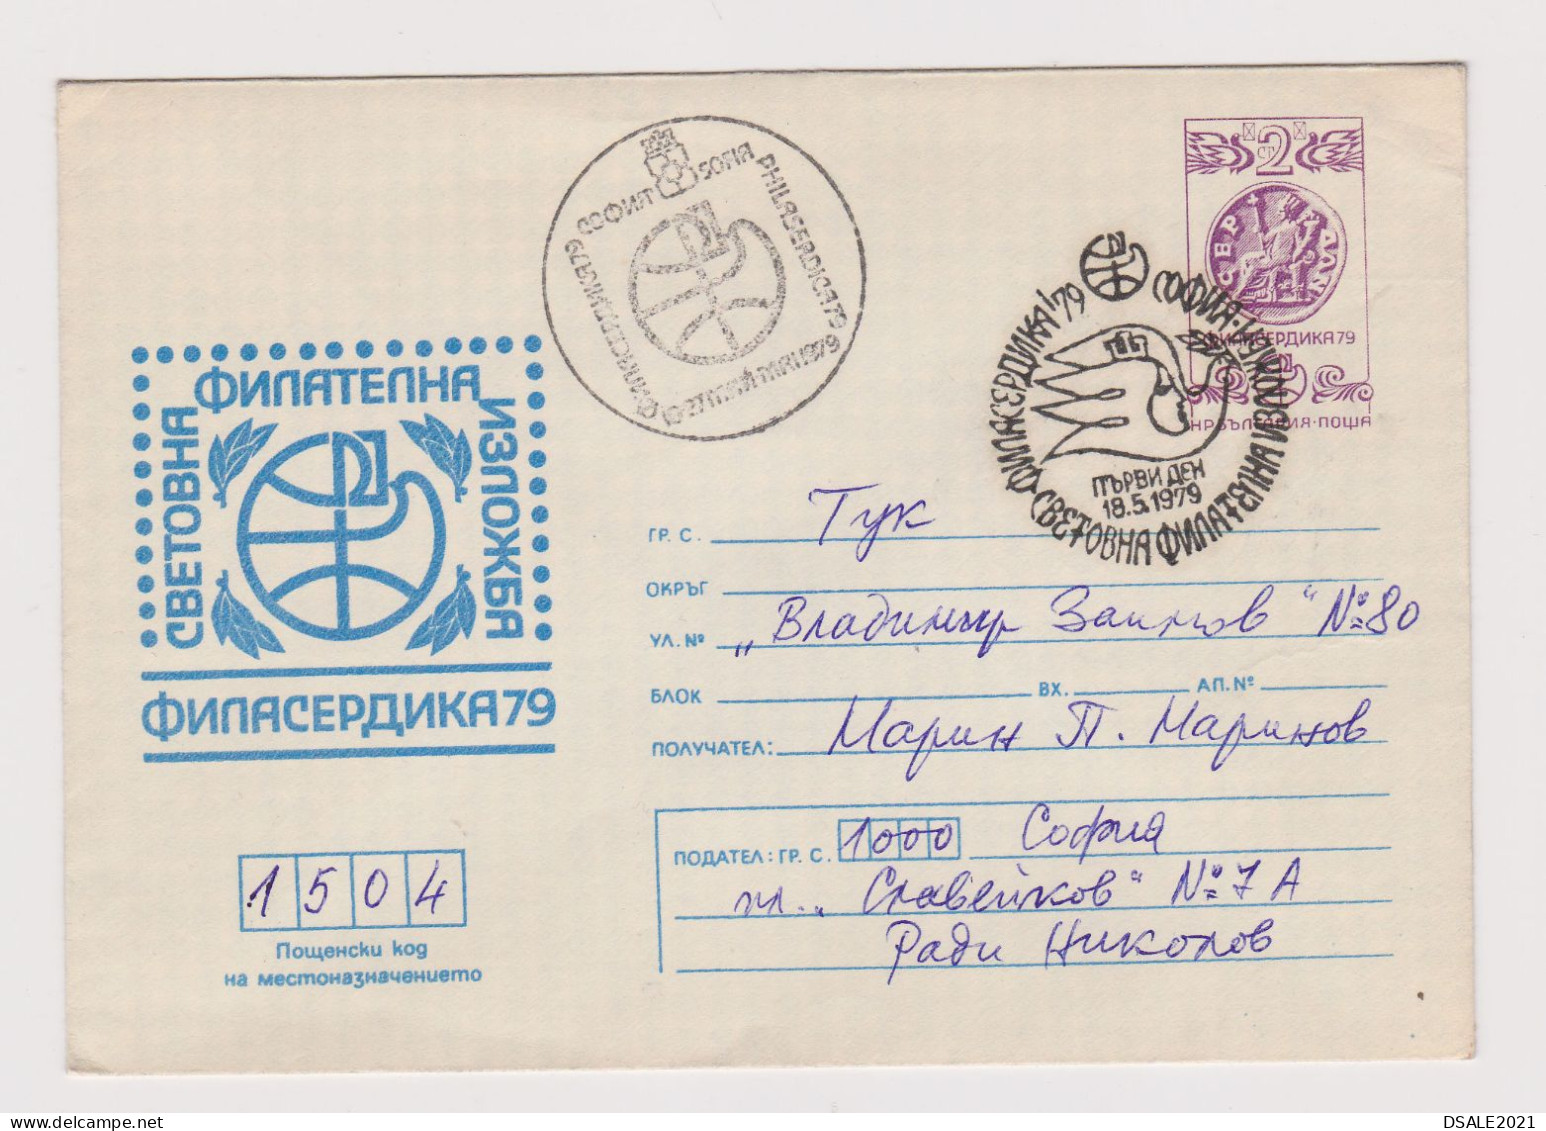 Bulgaria Bulgarien Bulgarie 1979 Postal Stationery Cover PSE, Entier, SOFIA-World Philatelic Exhibition (66388) - Covers